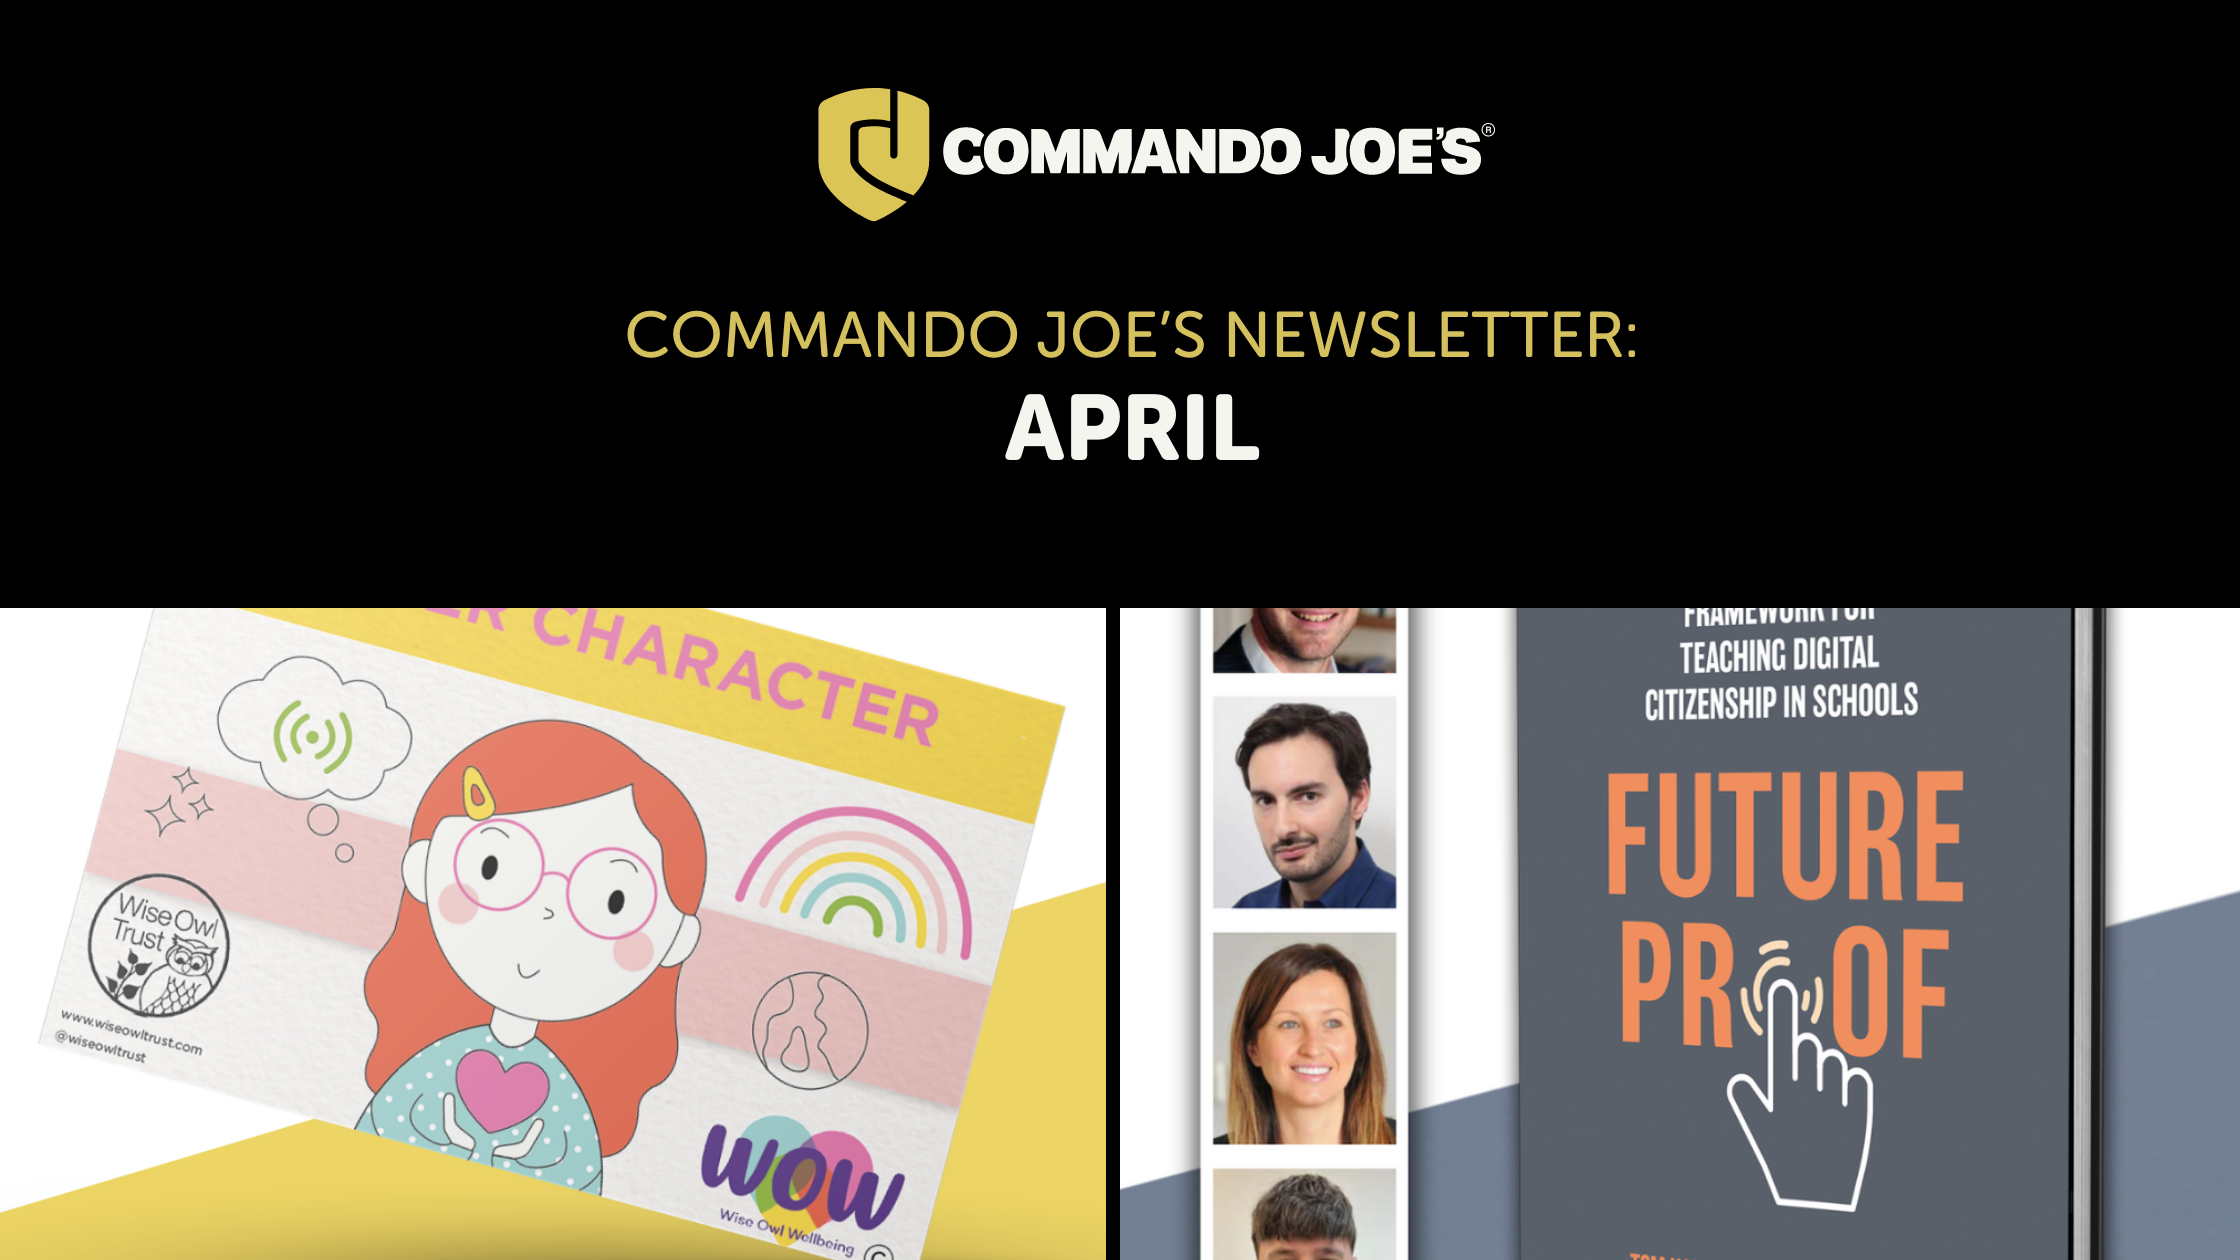 Commando Joe’s April Newsletter